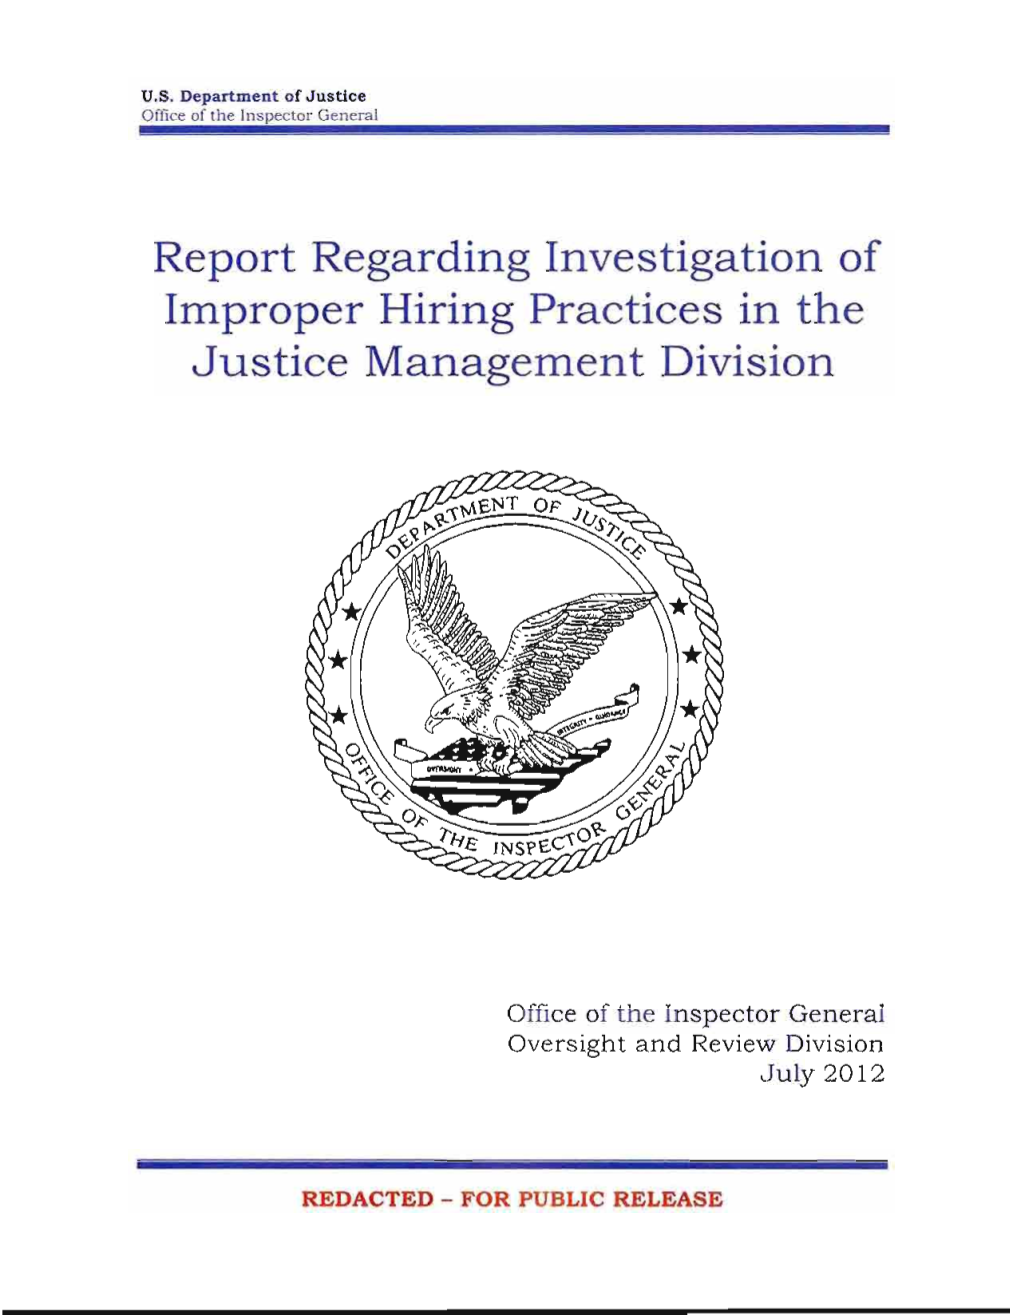 Report Regarding Investigation of Improper Hiring Practices in the Justice Management Division